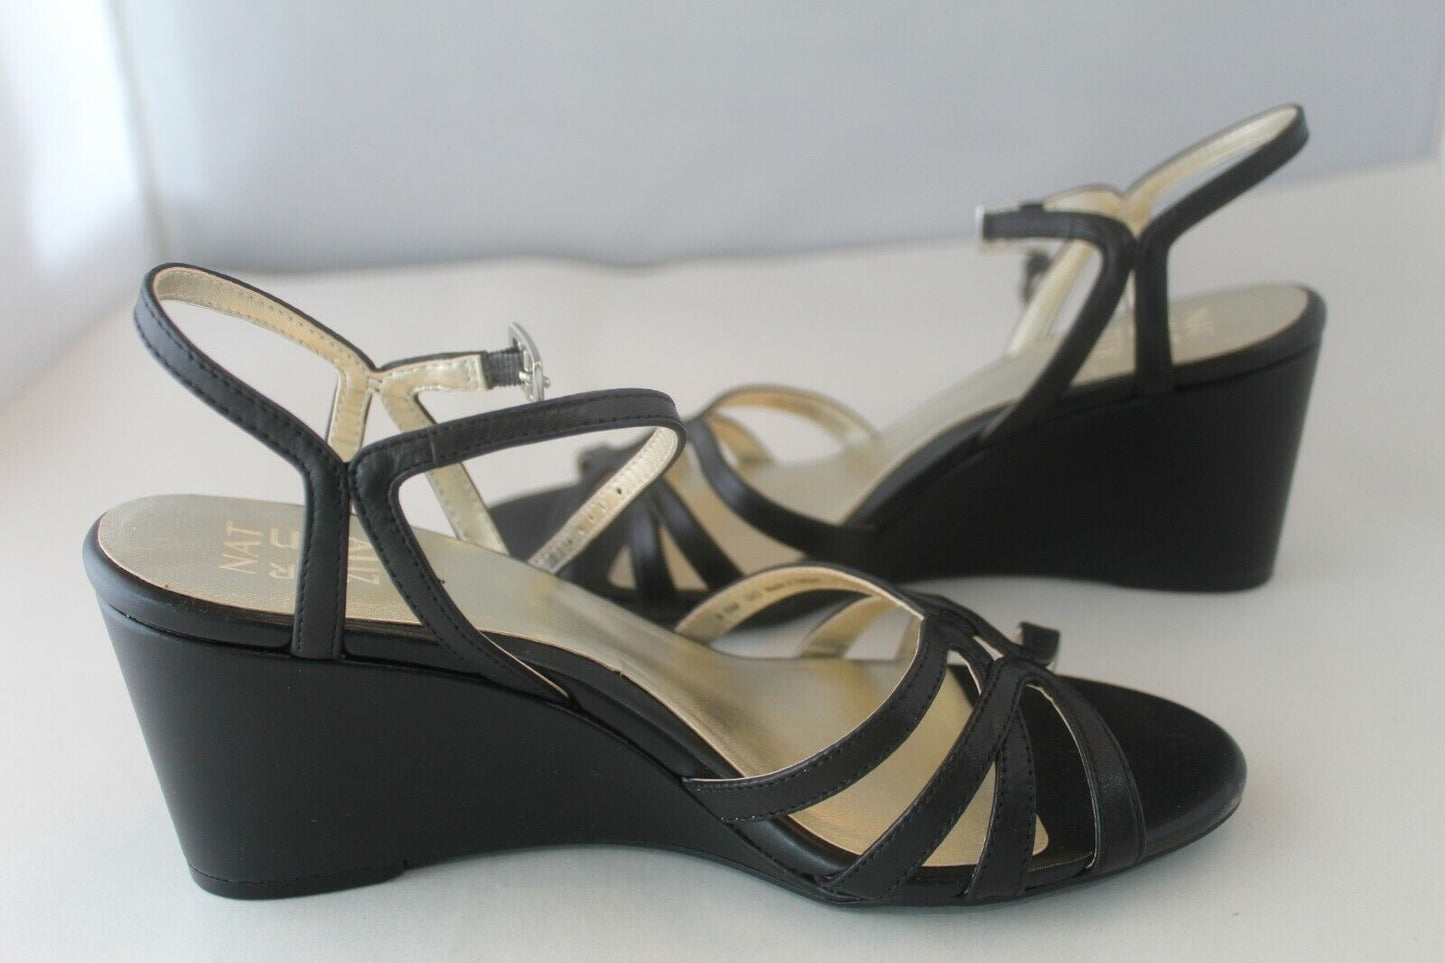 Naturalizer Women's Gio Wedge Sandal, Black Leather, Size 8.5 Medium